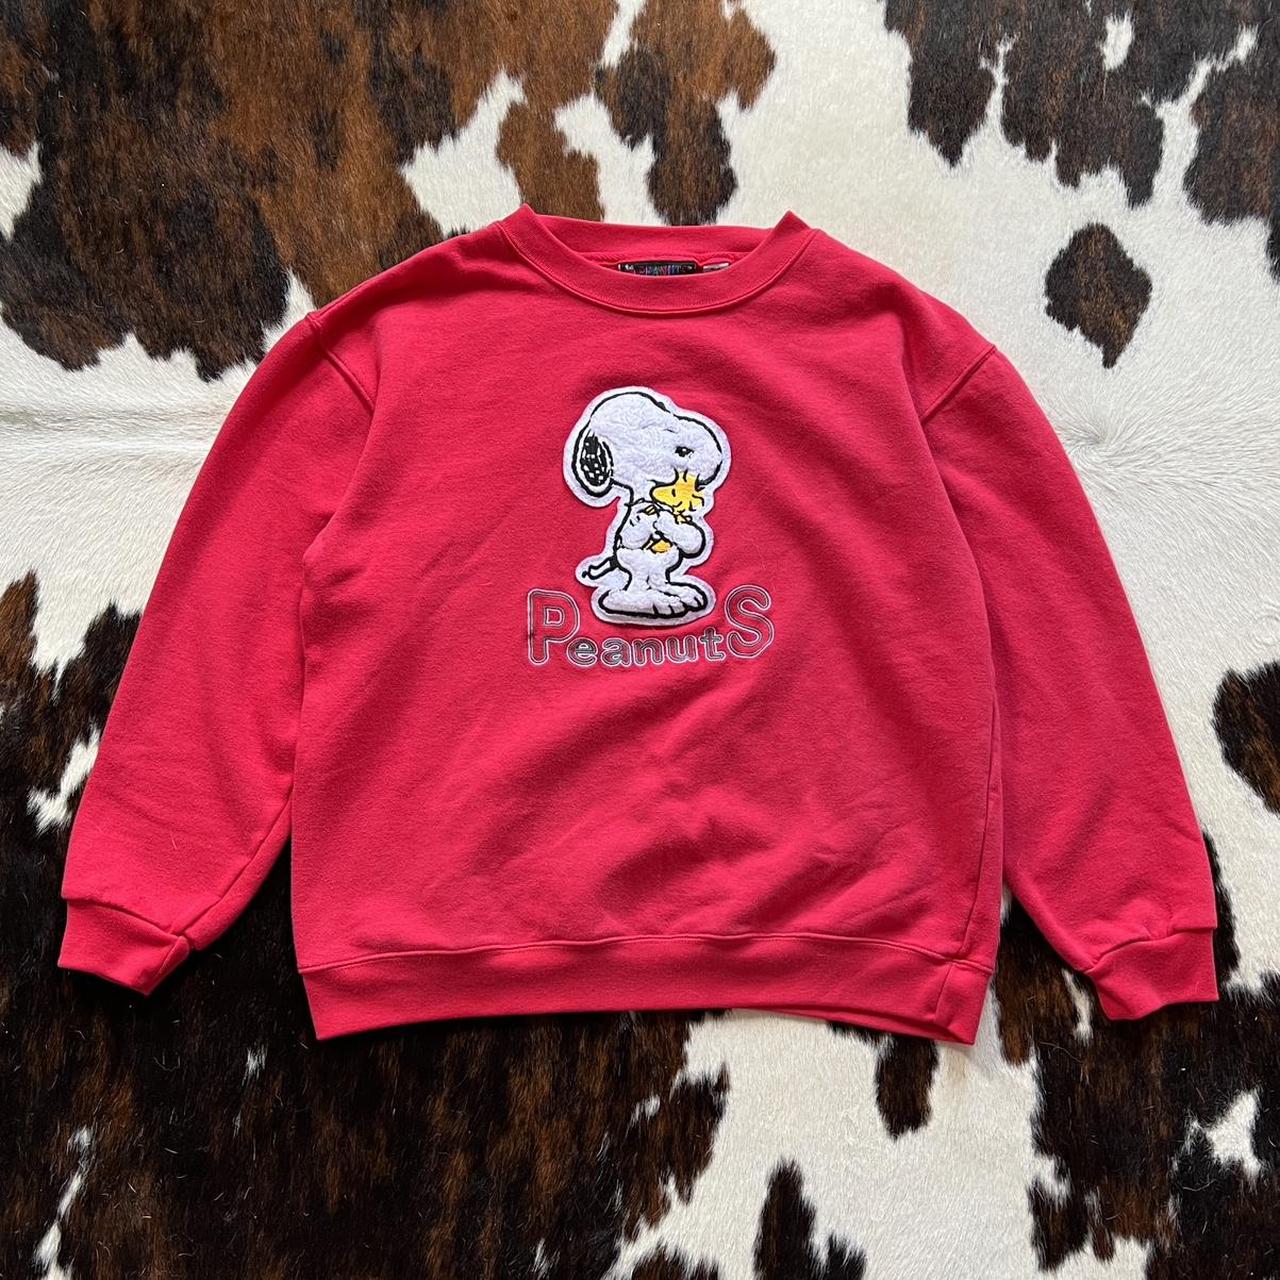 Peanuts Men's Red and White Sweatshirt | Depop